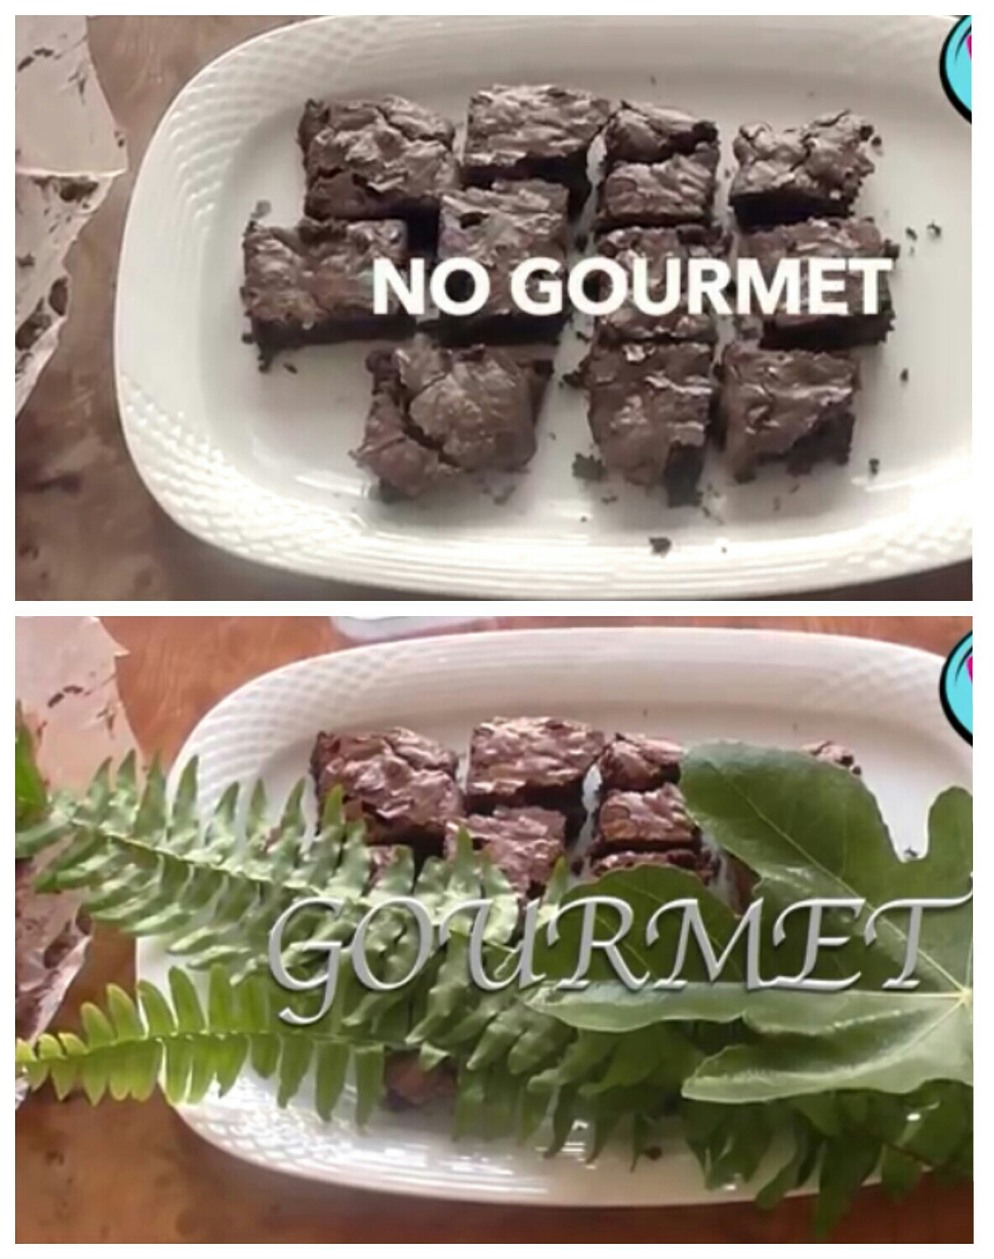 no gourmet/ gourmet - meme